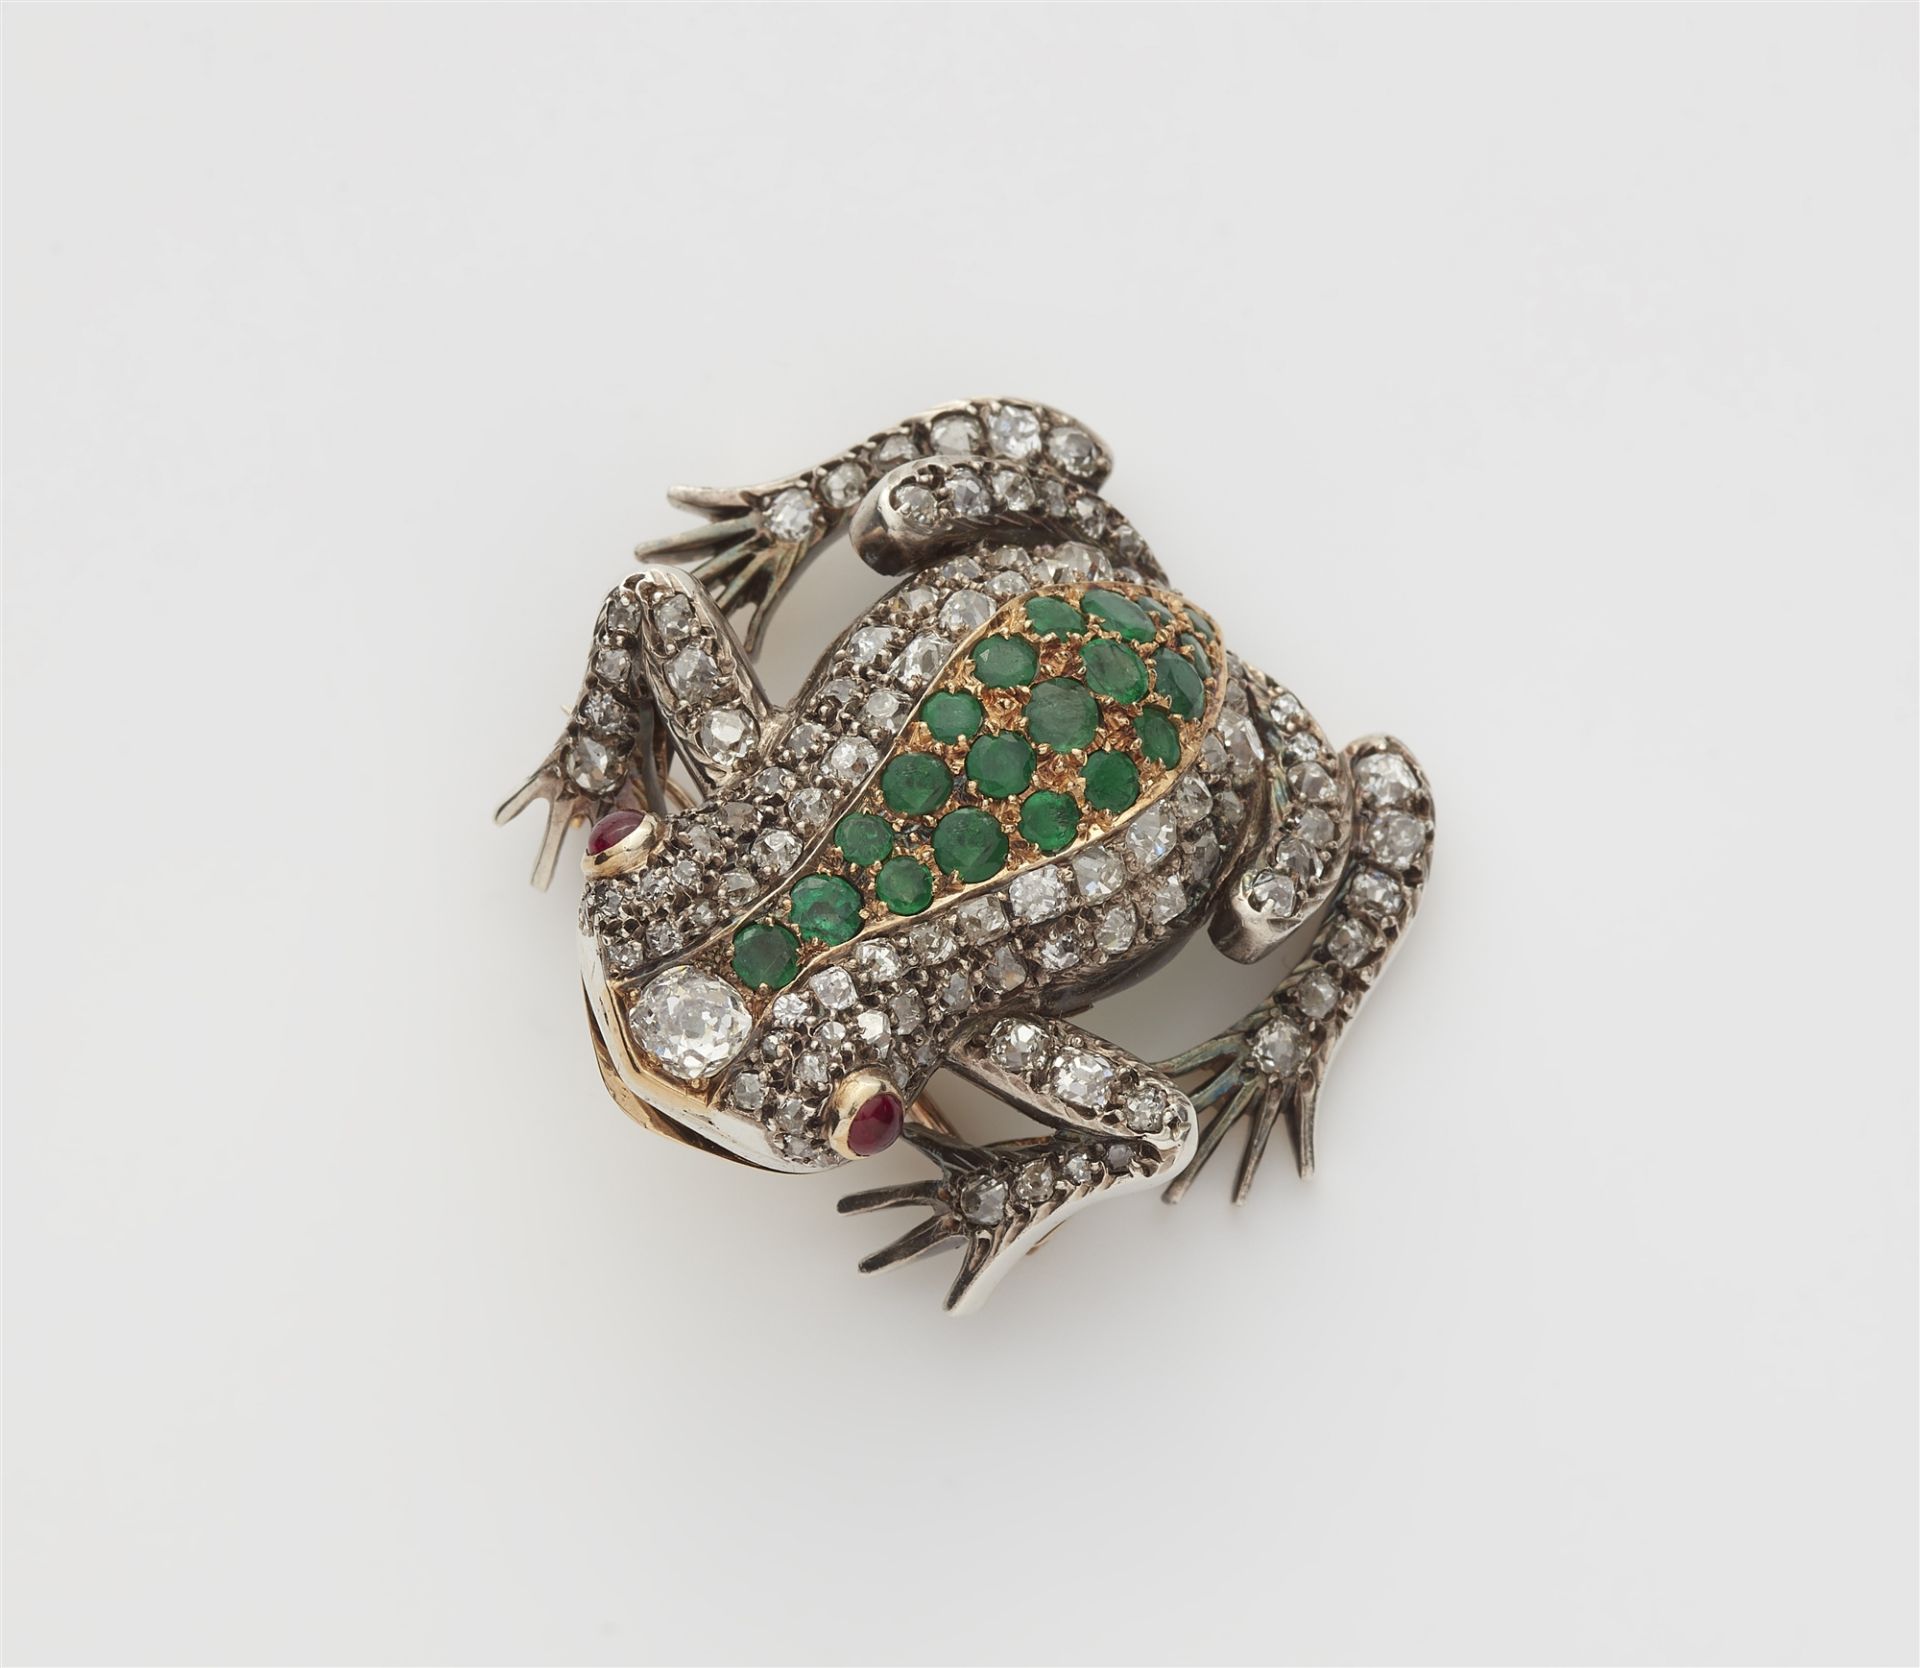 A silver 18k gold emerald and cushion cut diamond frog brooch.